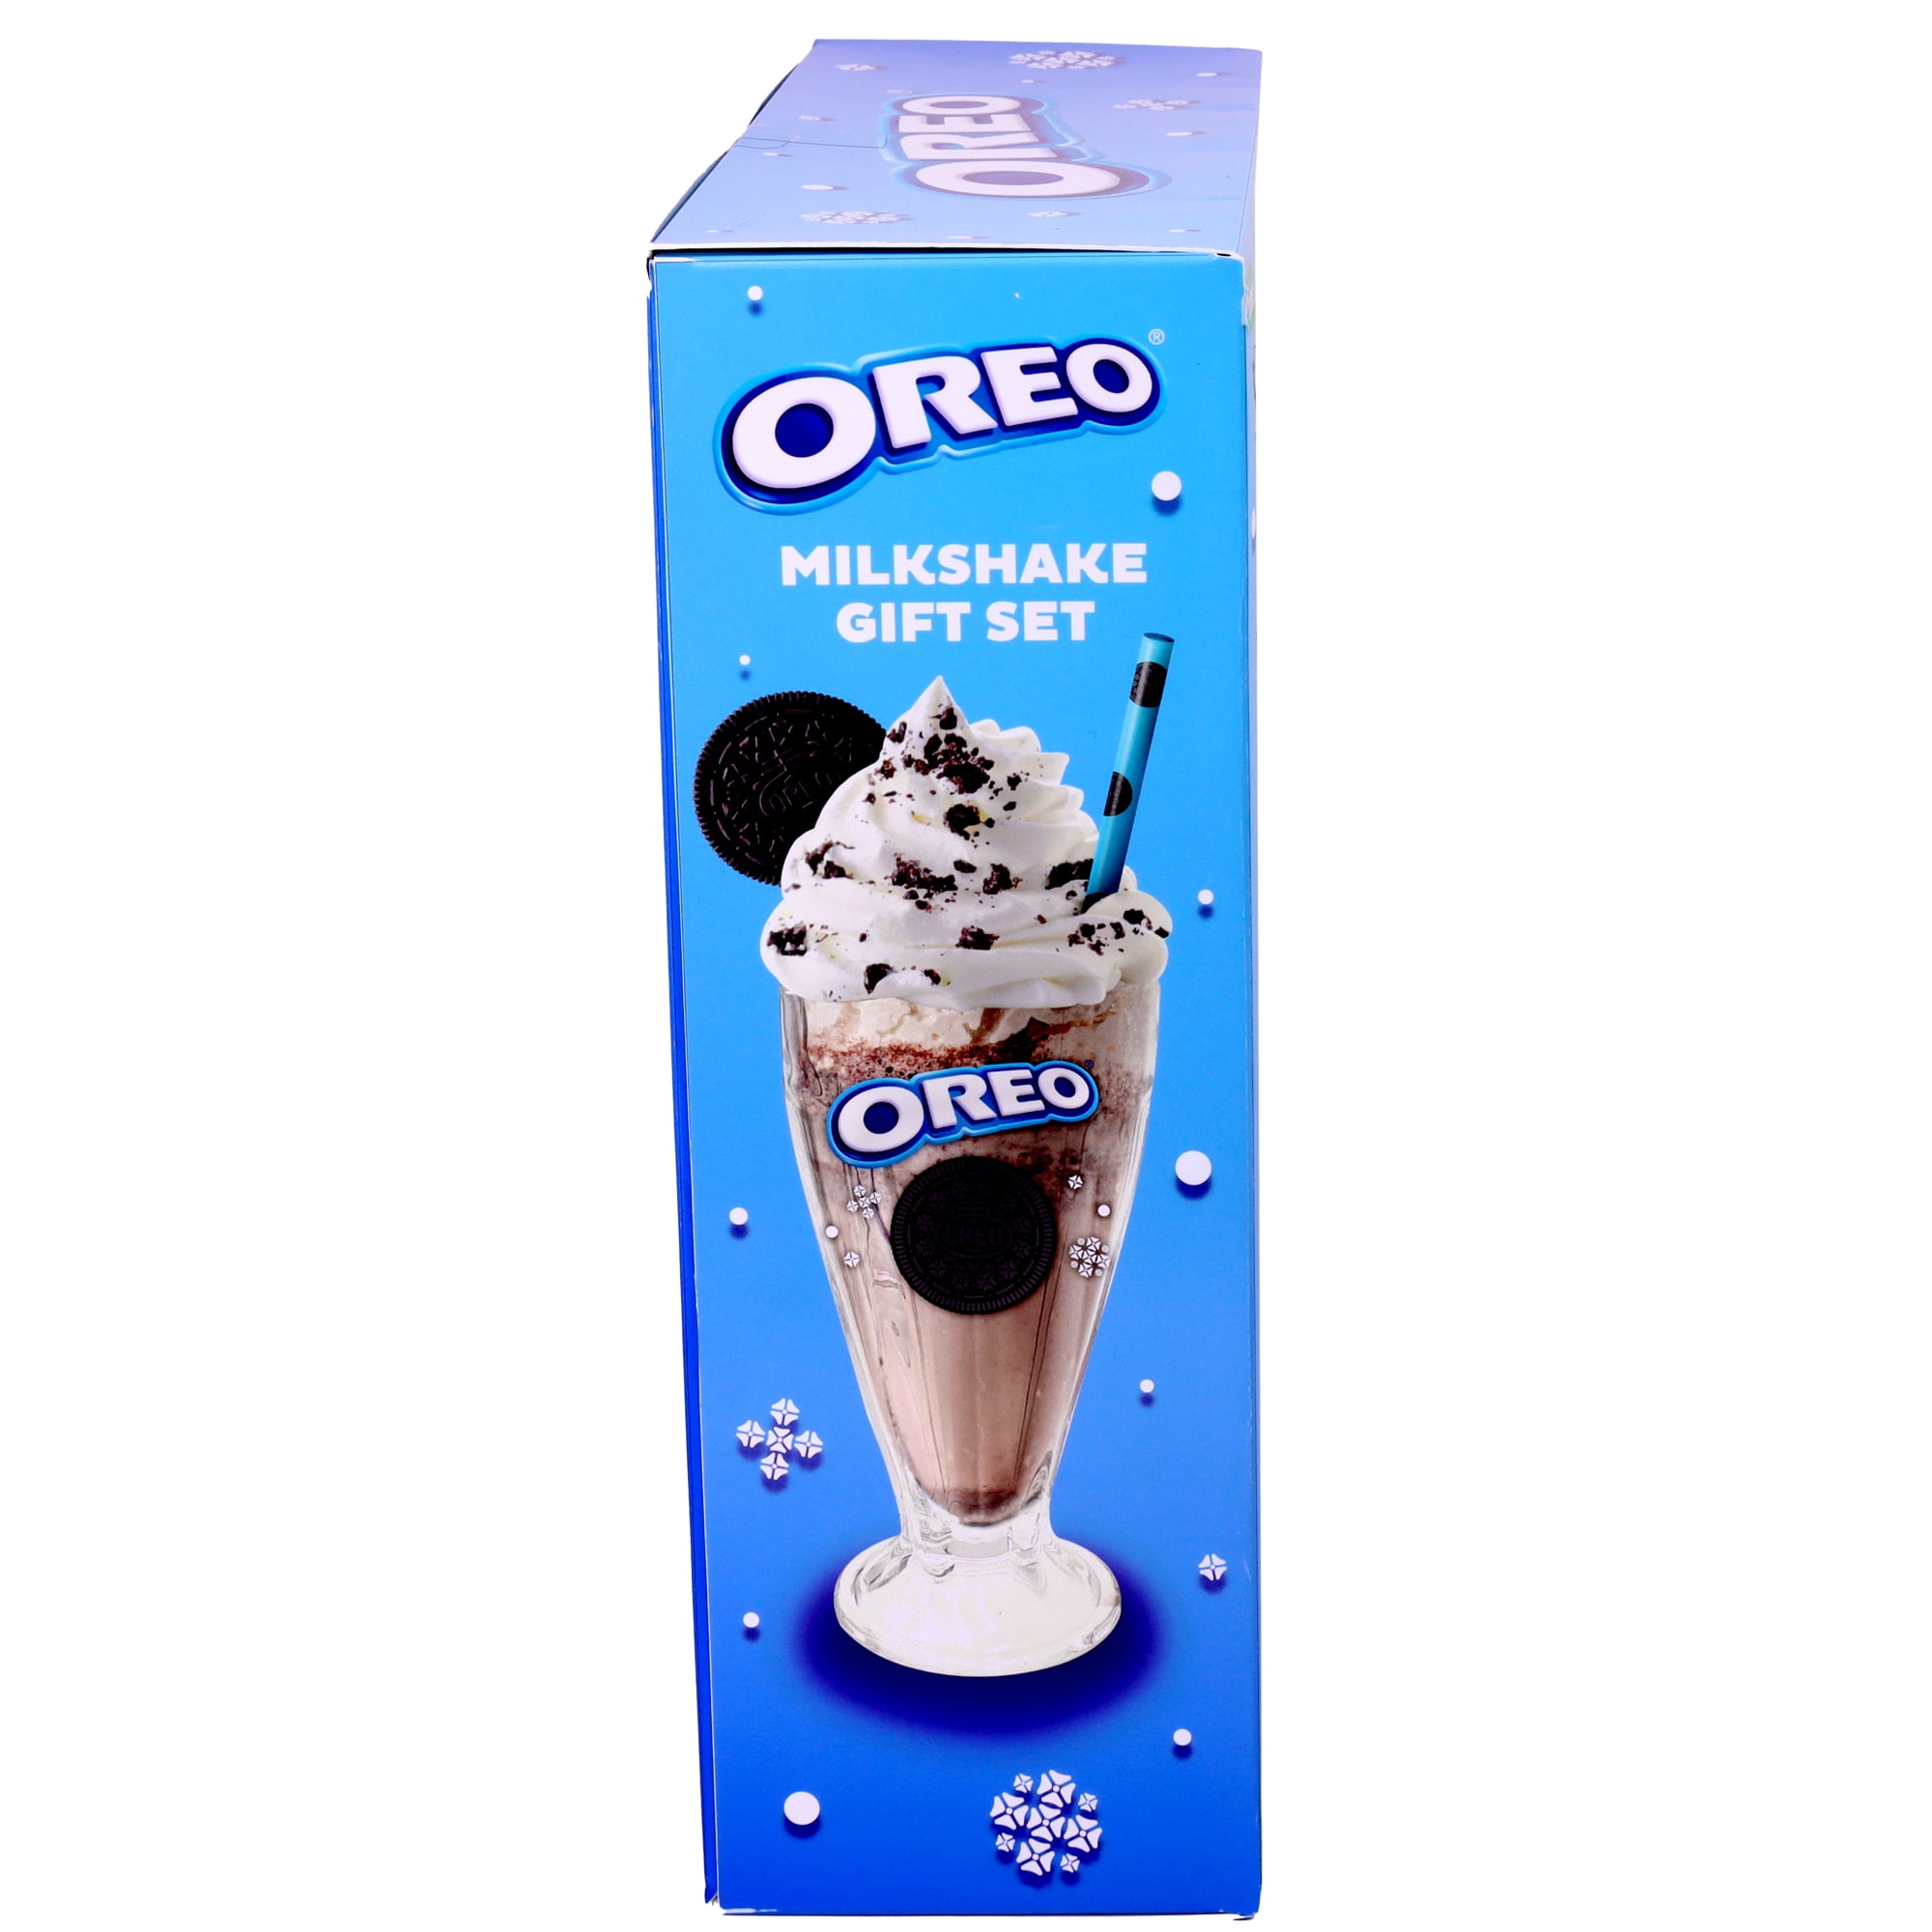 I am absolutely loving this @oreo Milkshake Gift Set! It comes